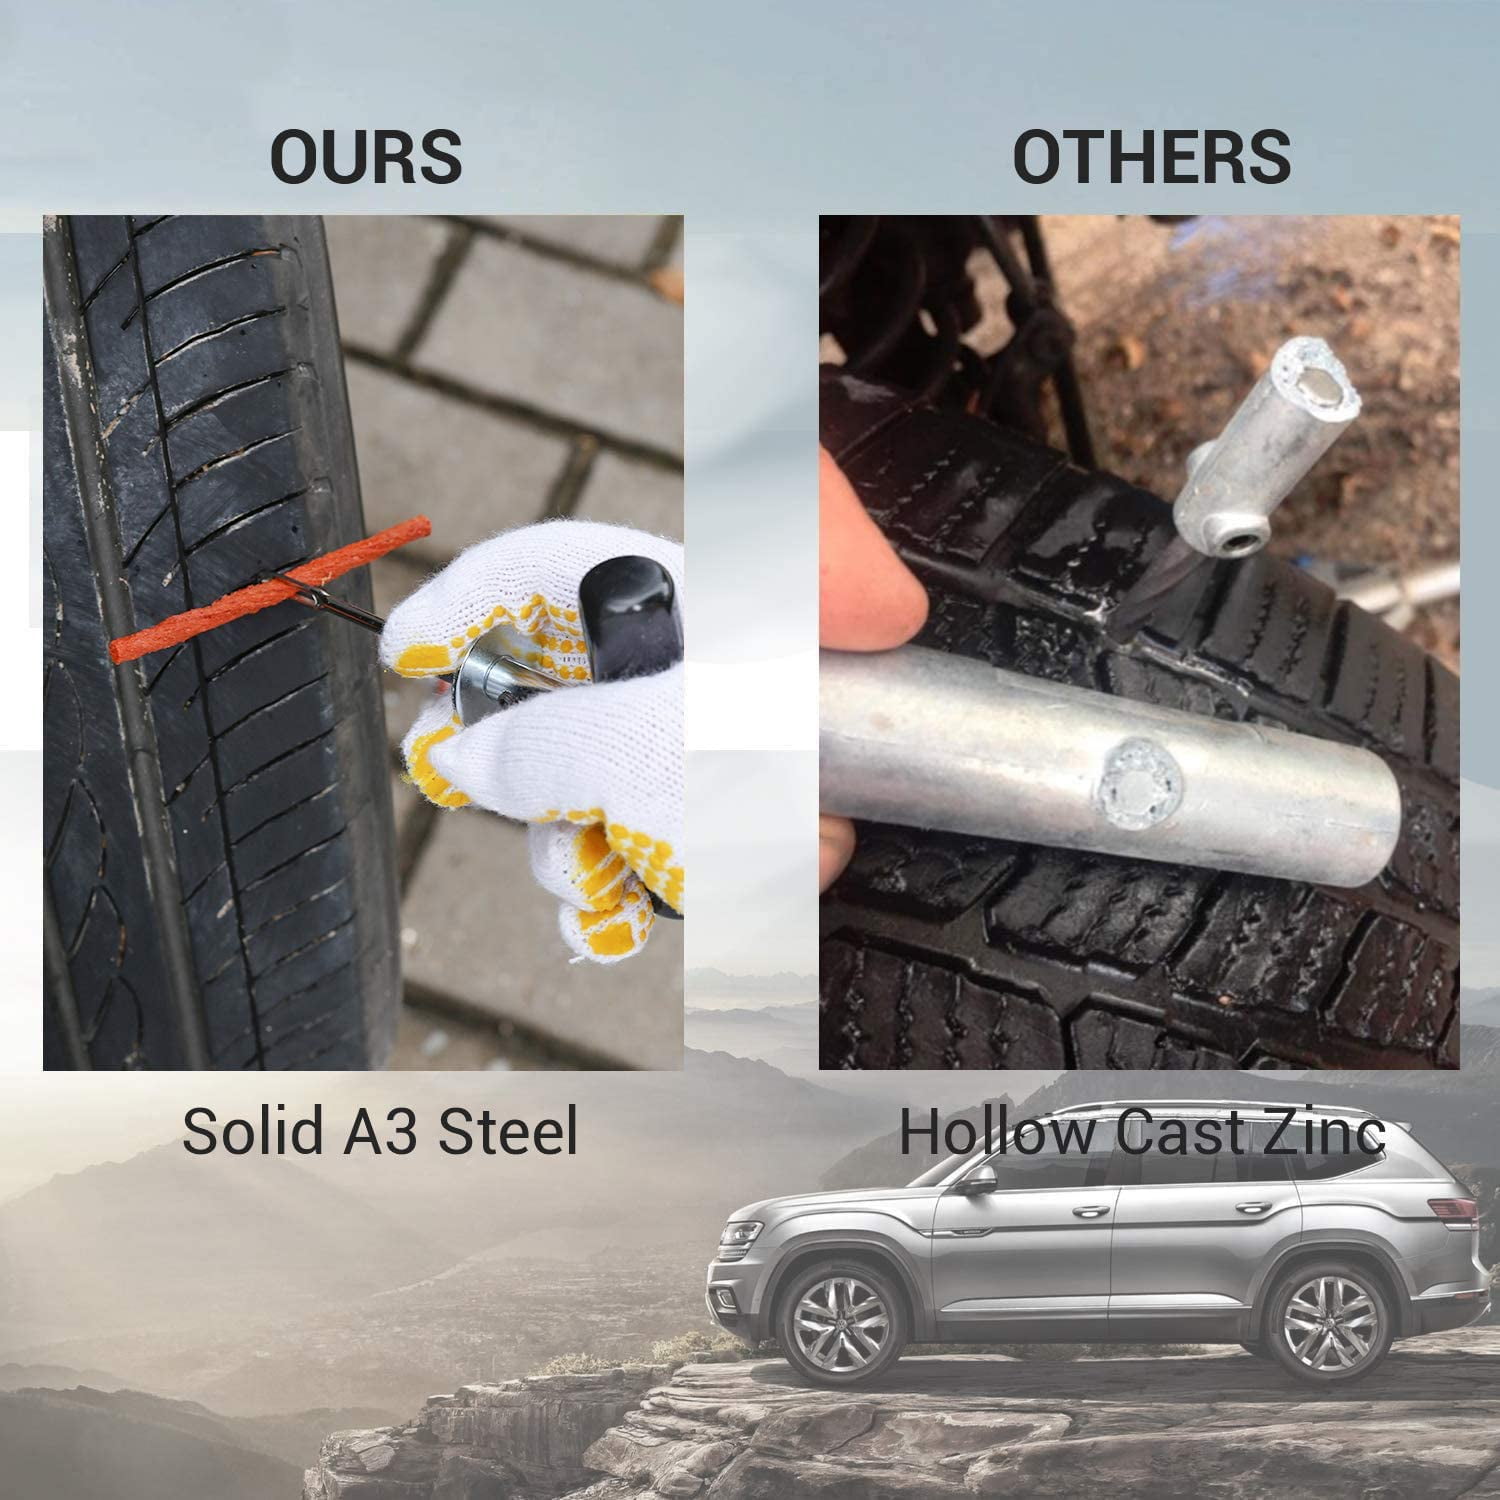 Truck ATV, Details about   TECCPO Tire Repair Kit 100Pcs Heavy Duty Tire Plug Kit for Car RV 